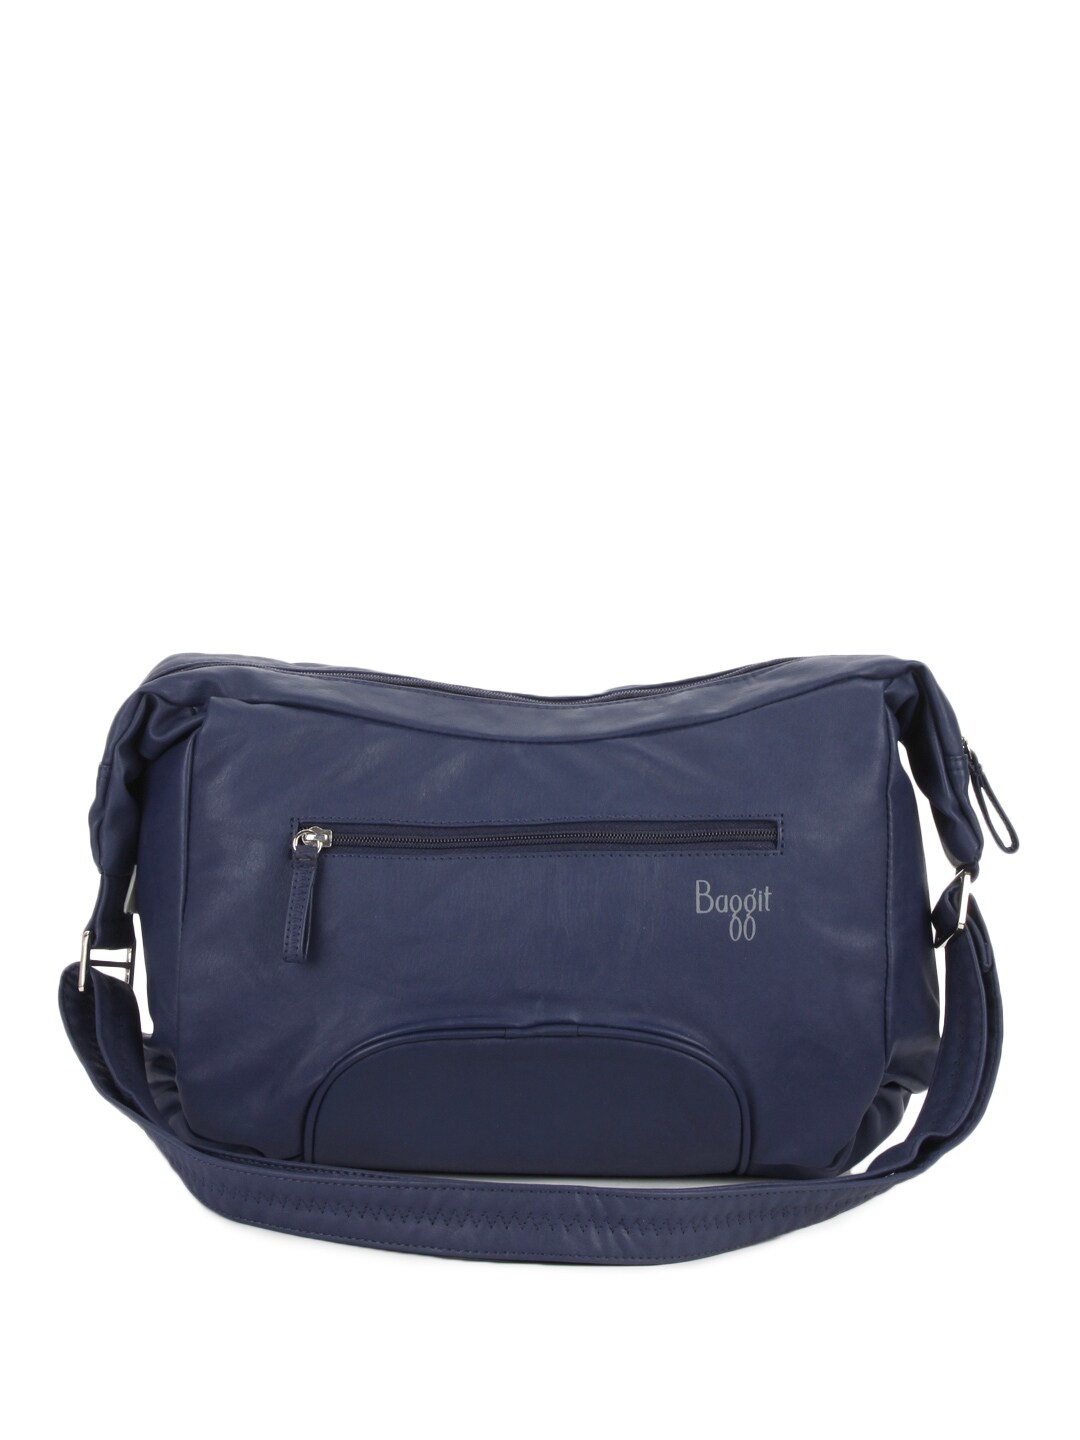 Baggit Women Confident Gipsy Blue Handbag